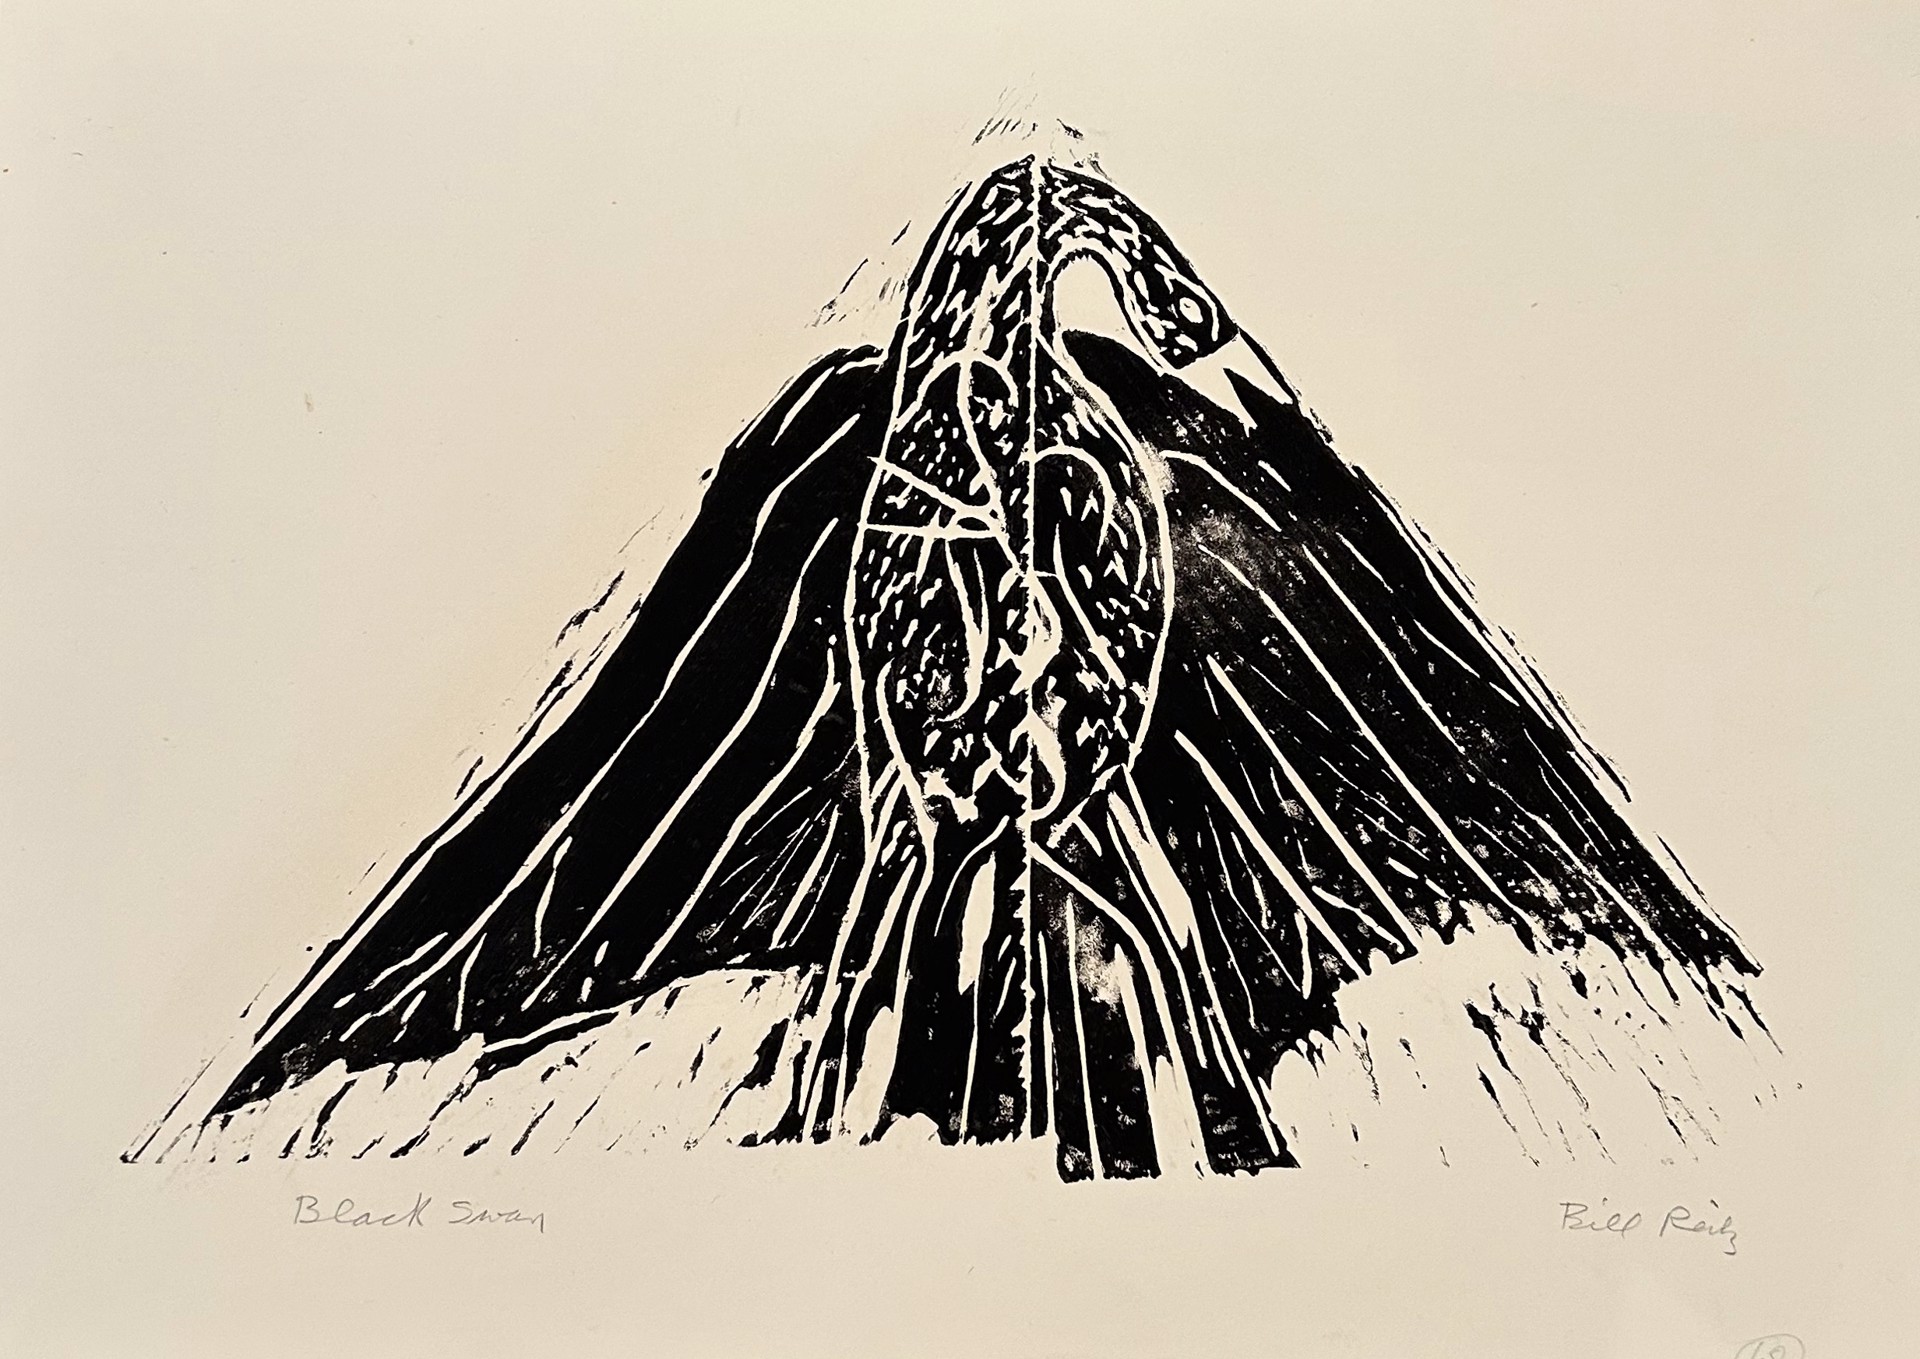 68. Black Swan (12 prints, including 1 Artist's proof) by Bill Reily Prints